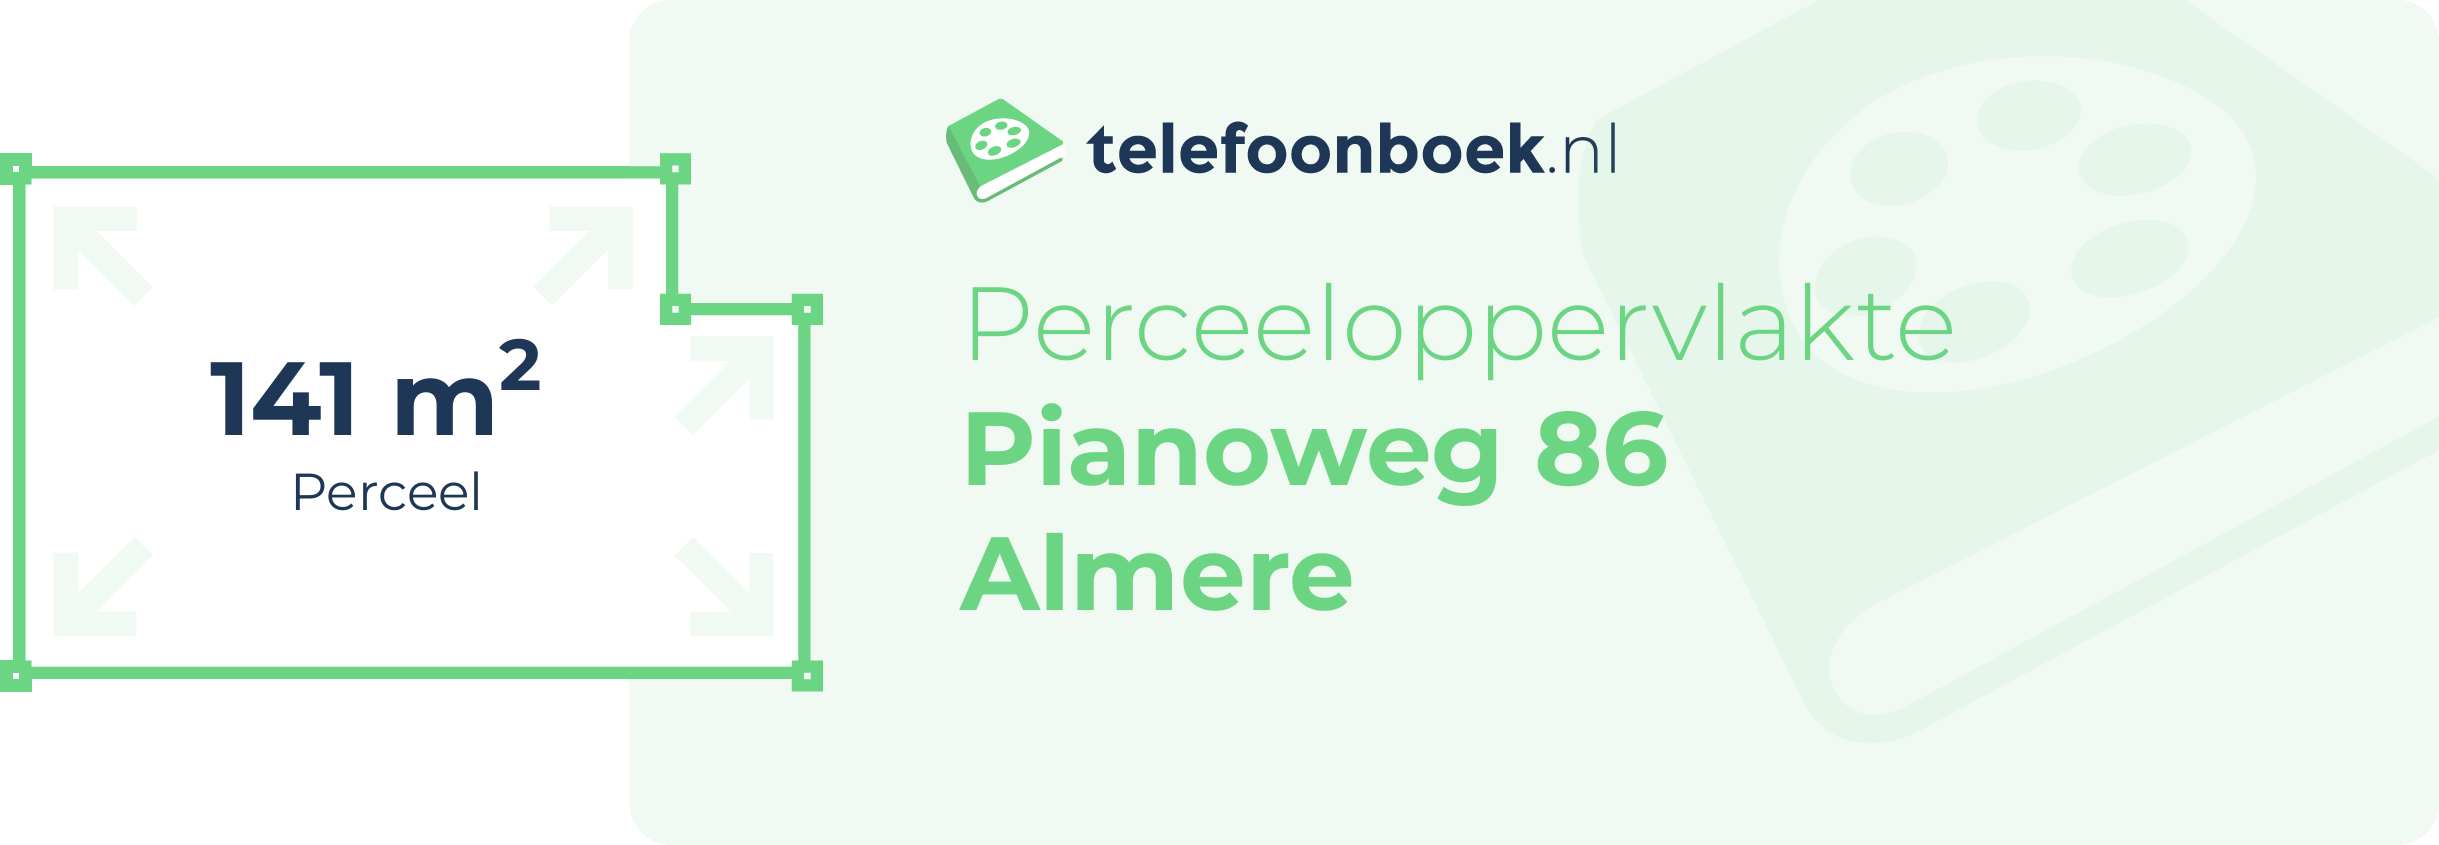 Perceeloppervlakte Pianoweg 86 Almere